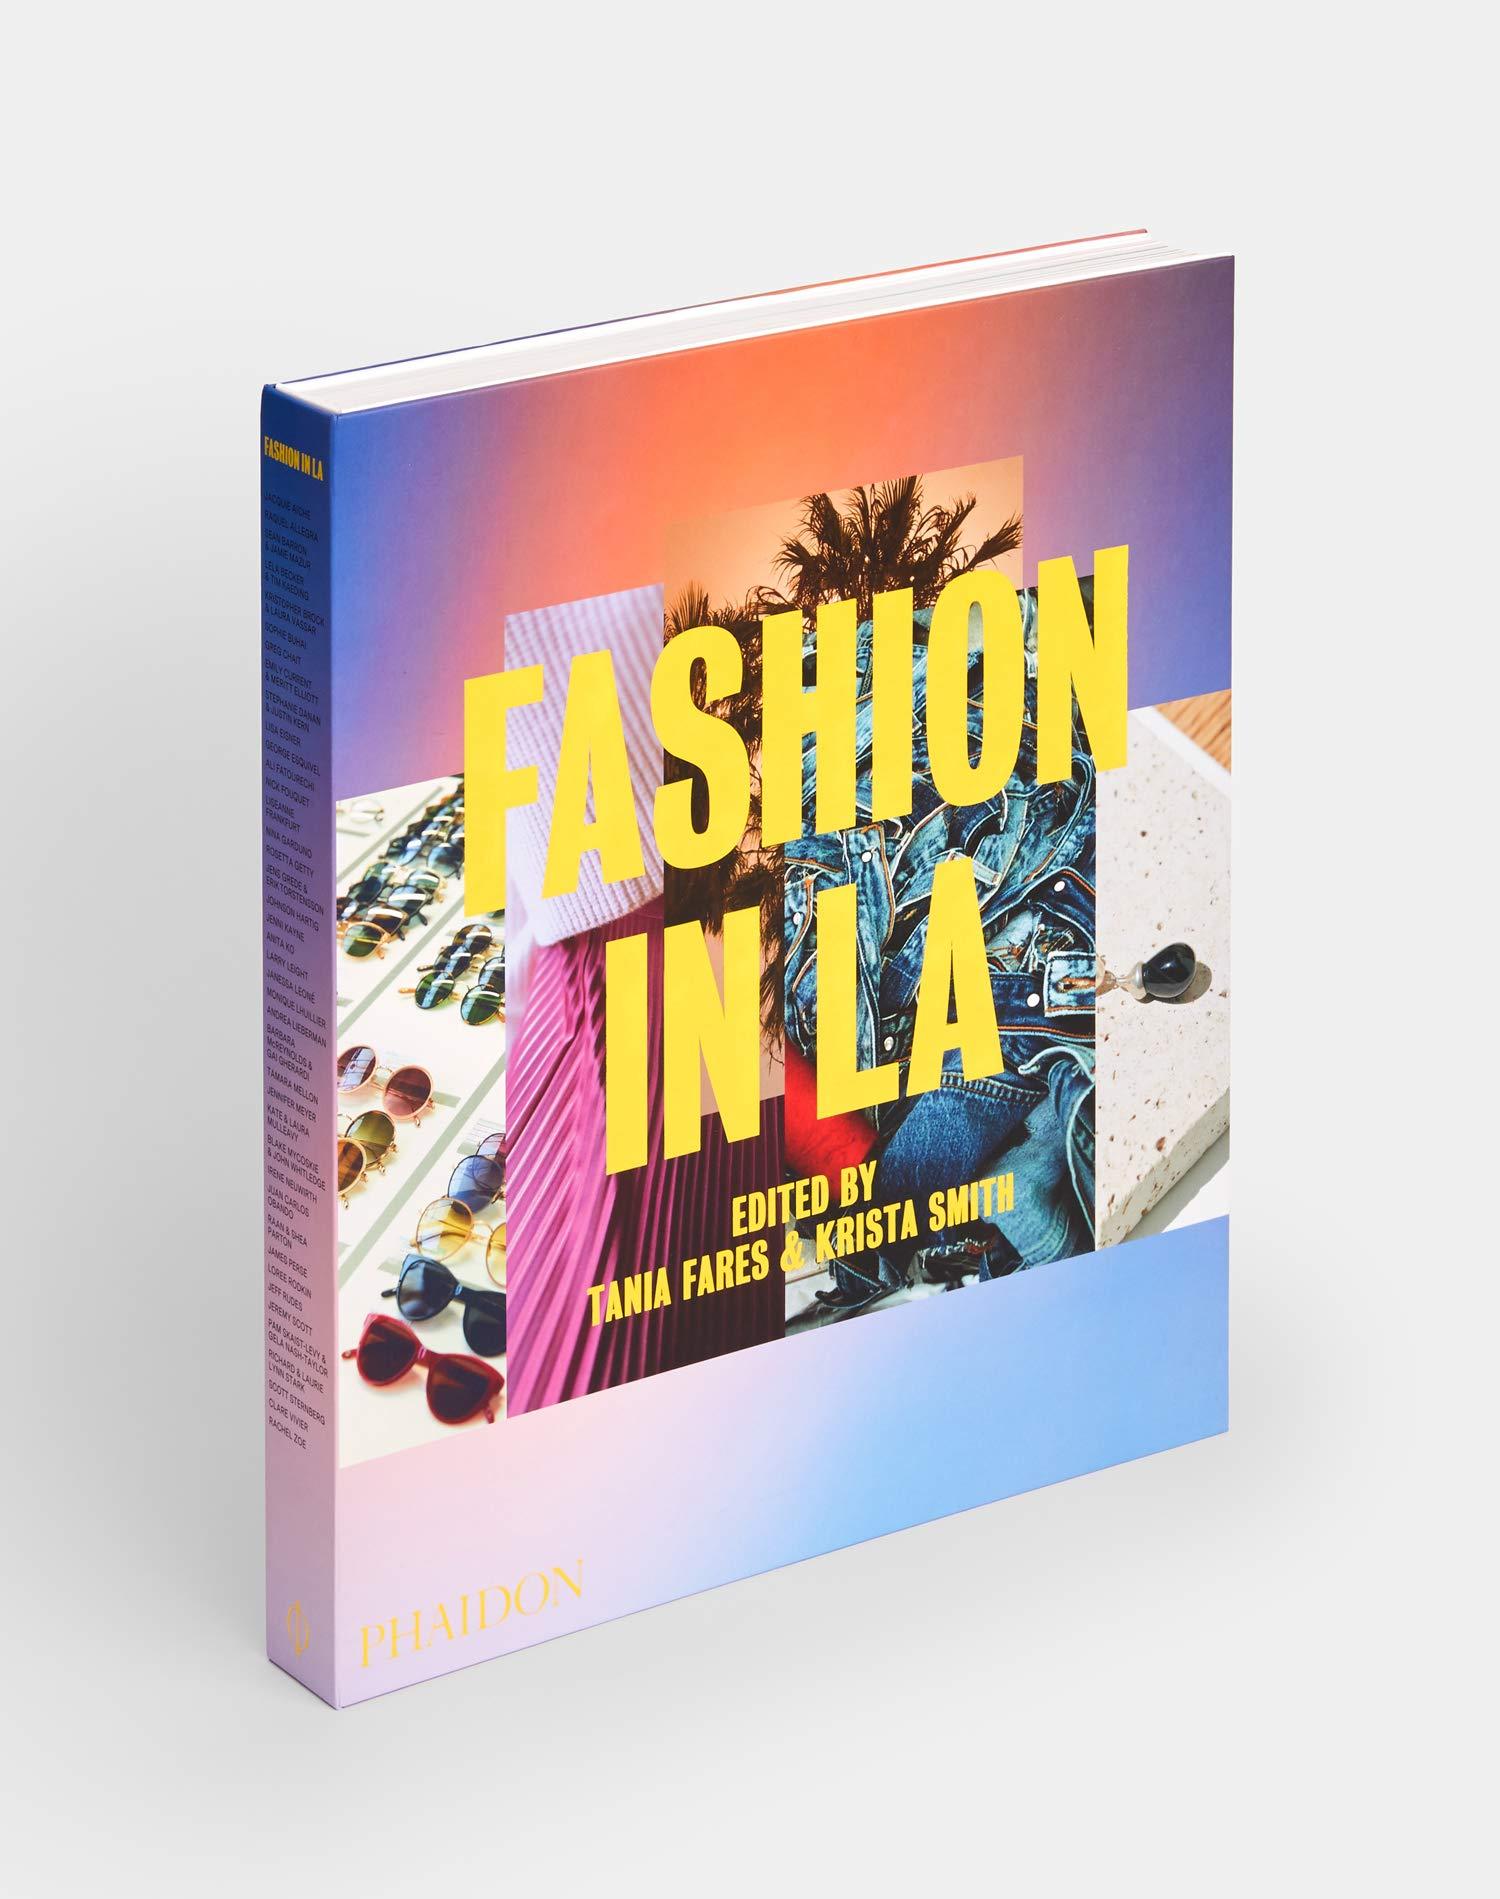 Modern In Stock in Los Angeles, Fashion in LA by Tania Fares & Krista Smith